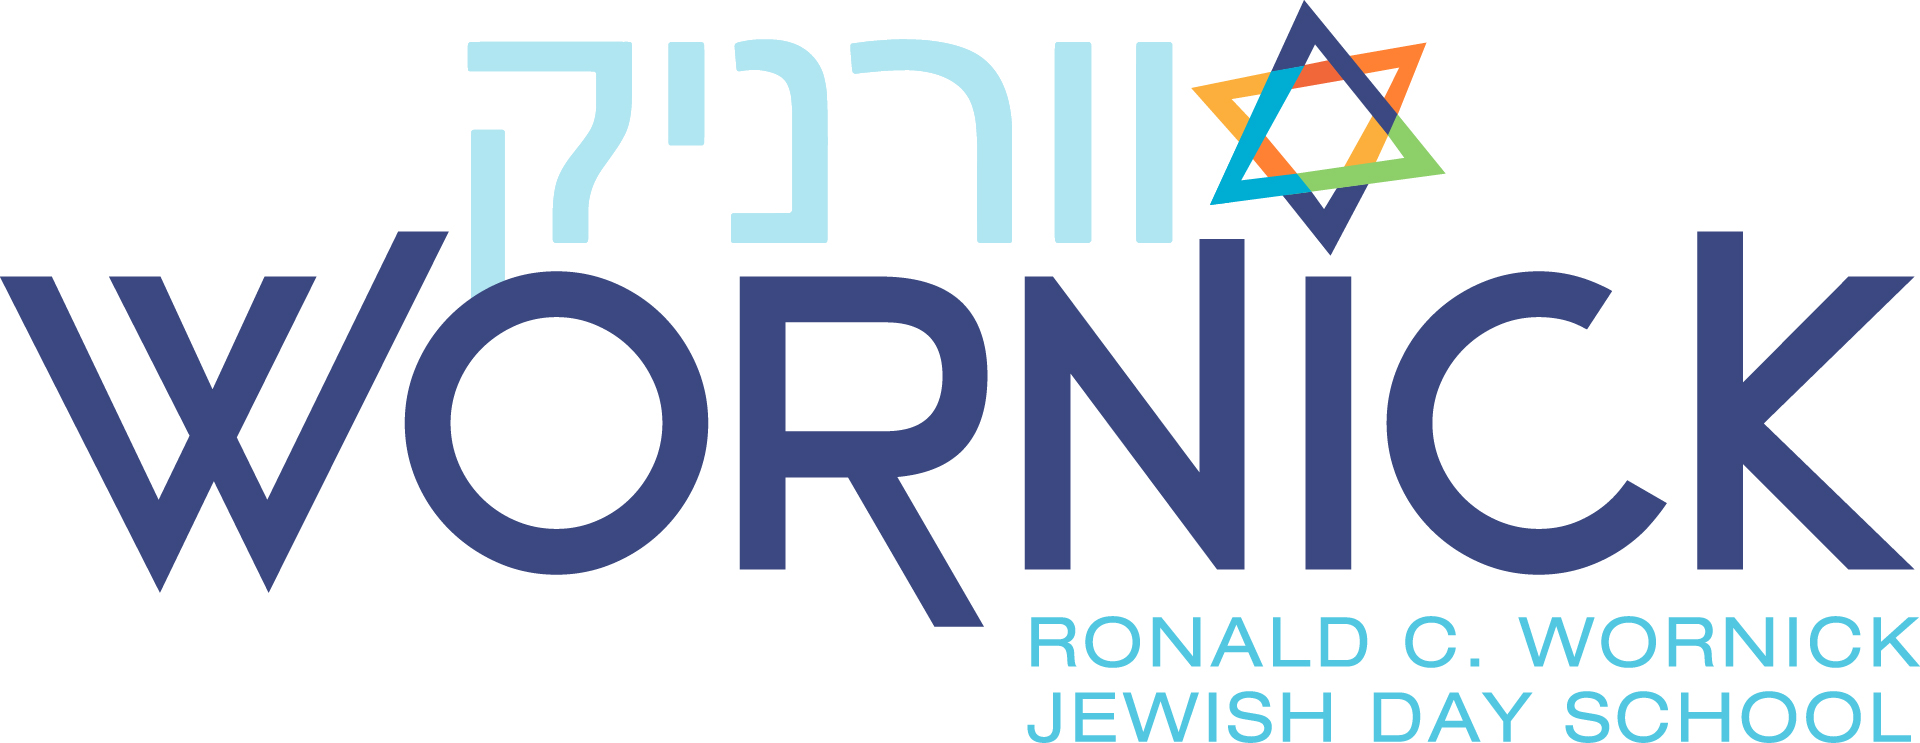 Ronald C Wornick Jewish Day School logo